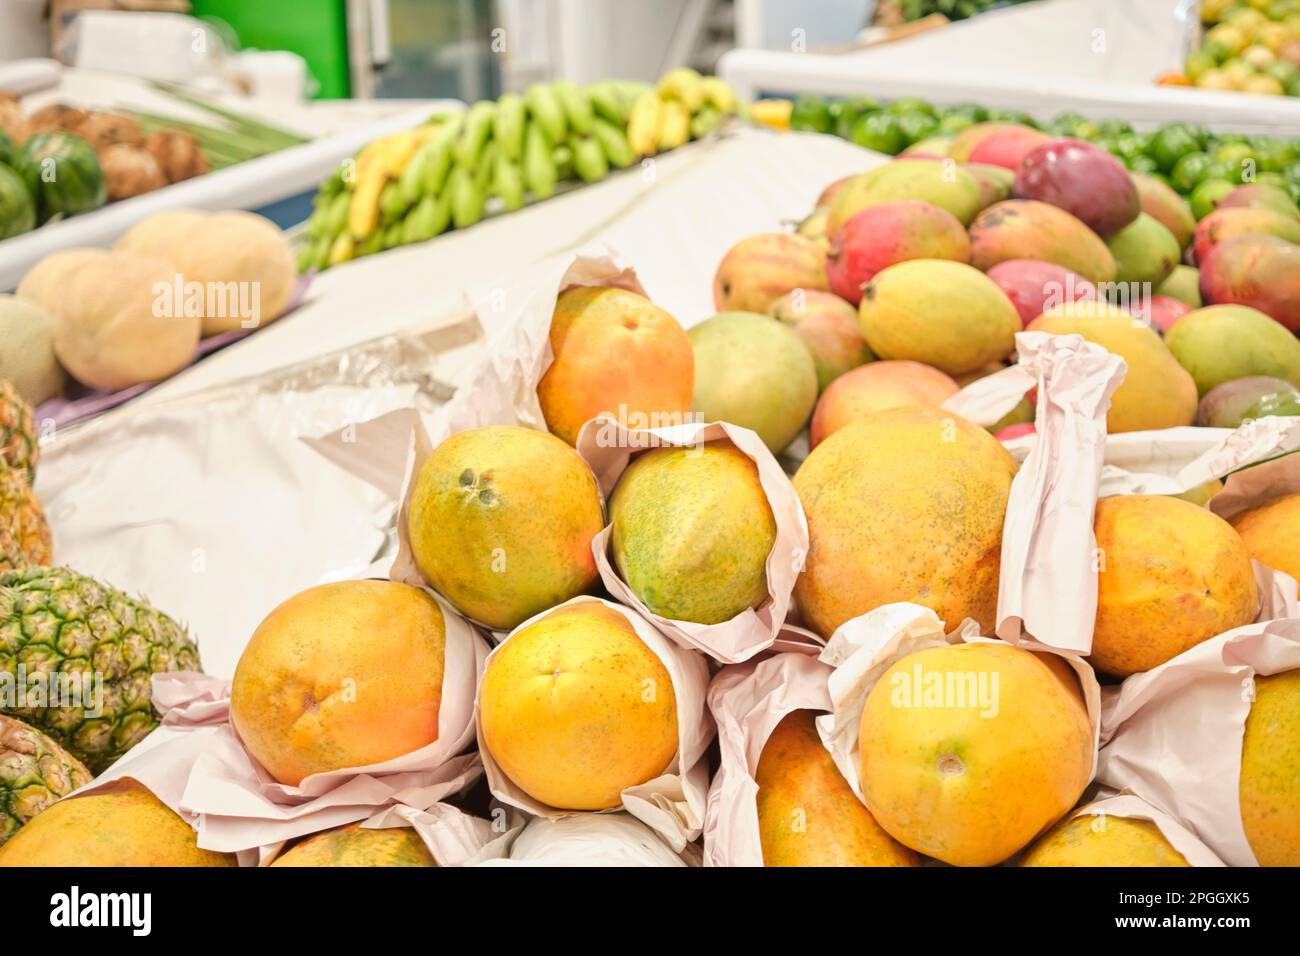 Tropical fruits for sale at a vegetable market stall: papayas, mangoes, pineapples, bananas, melons. Stock Photo